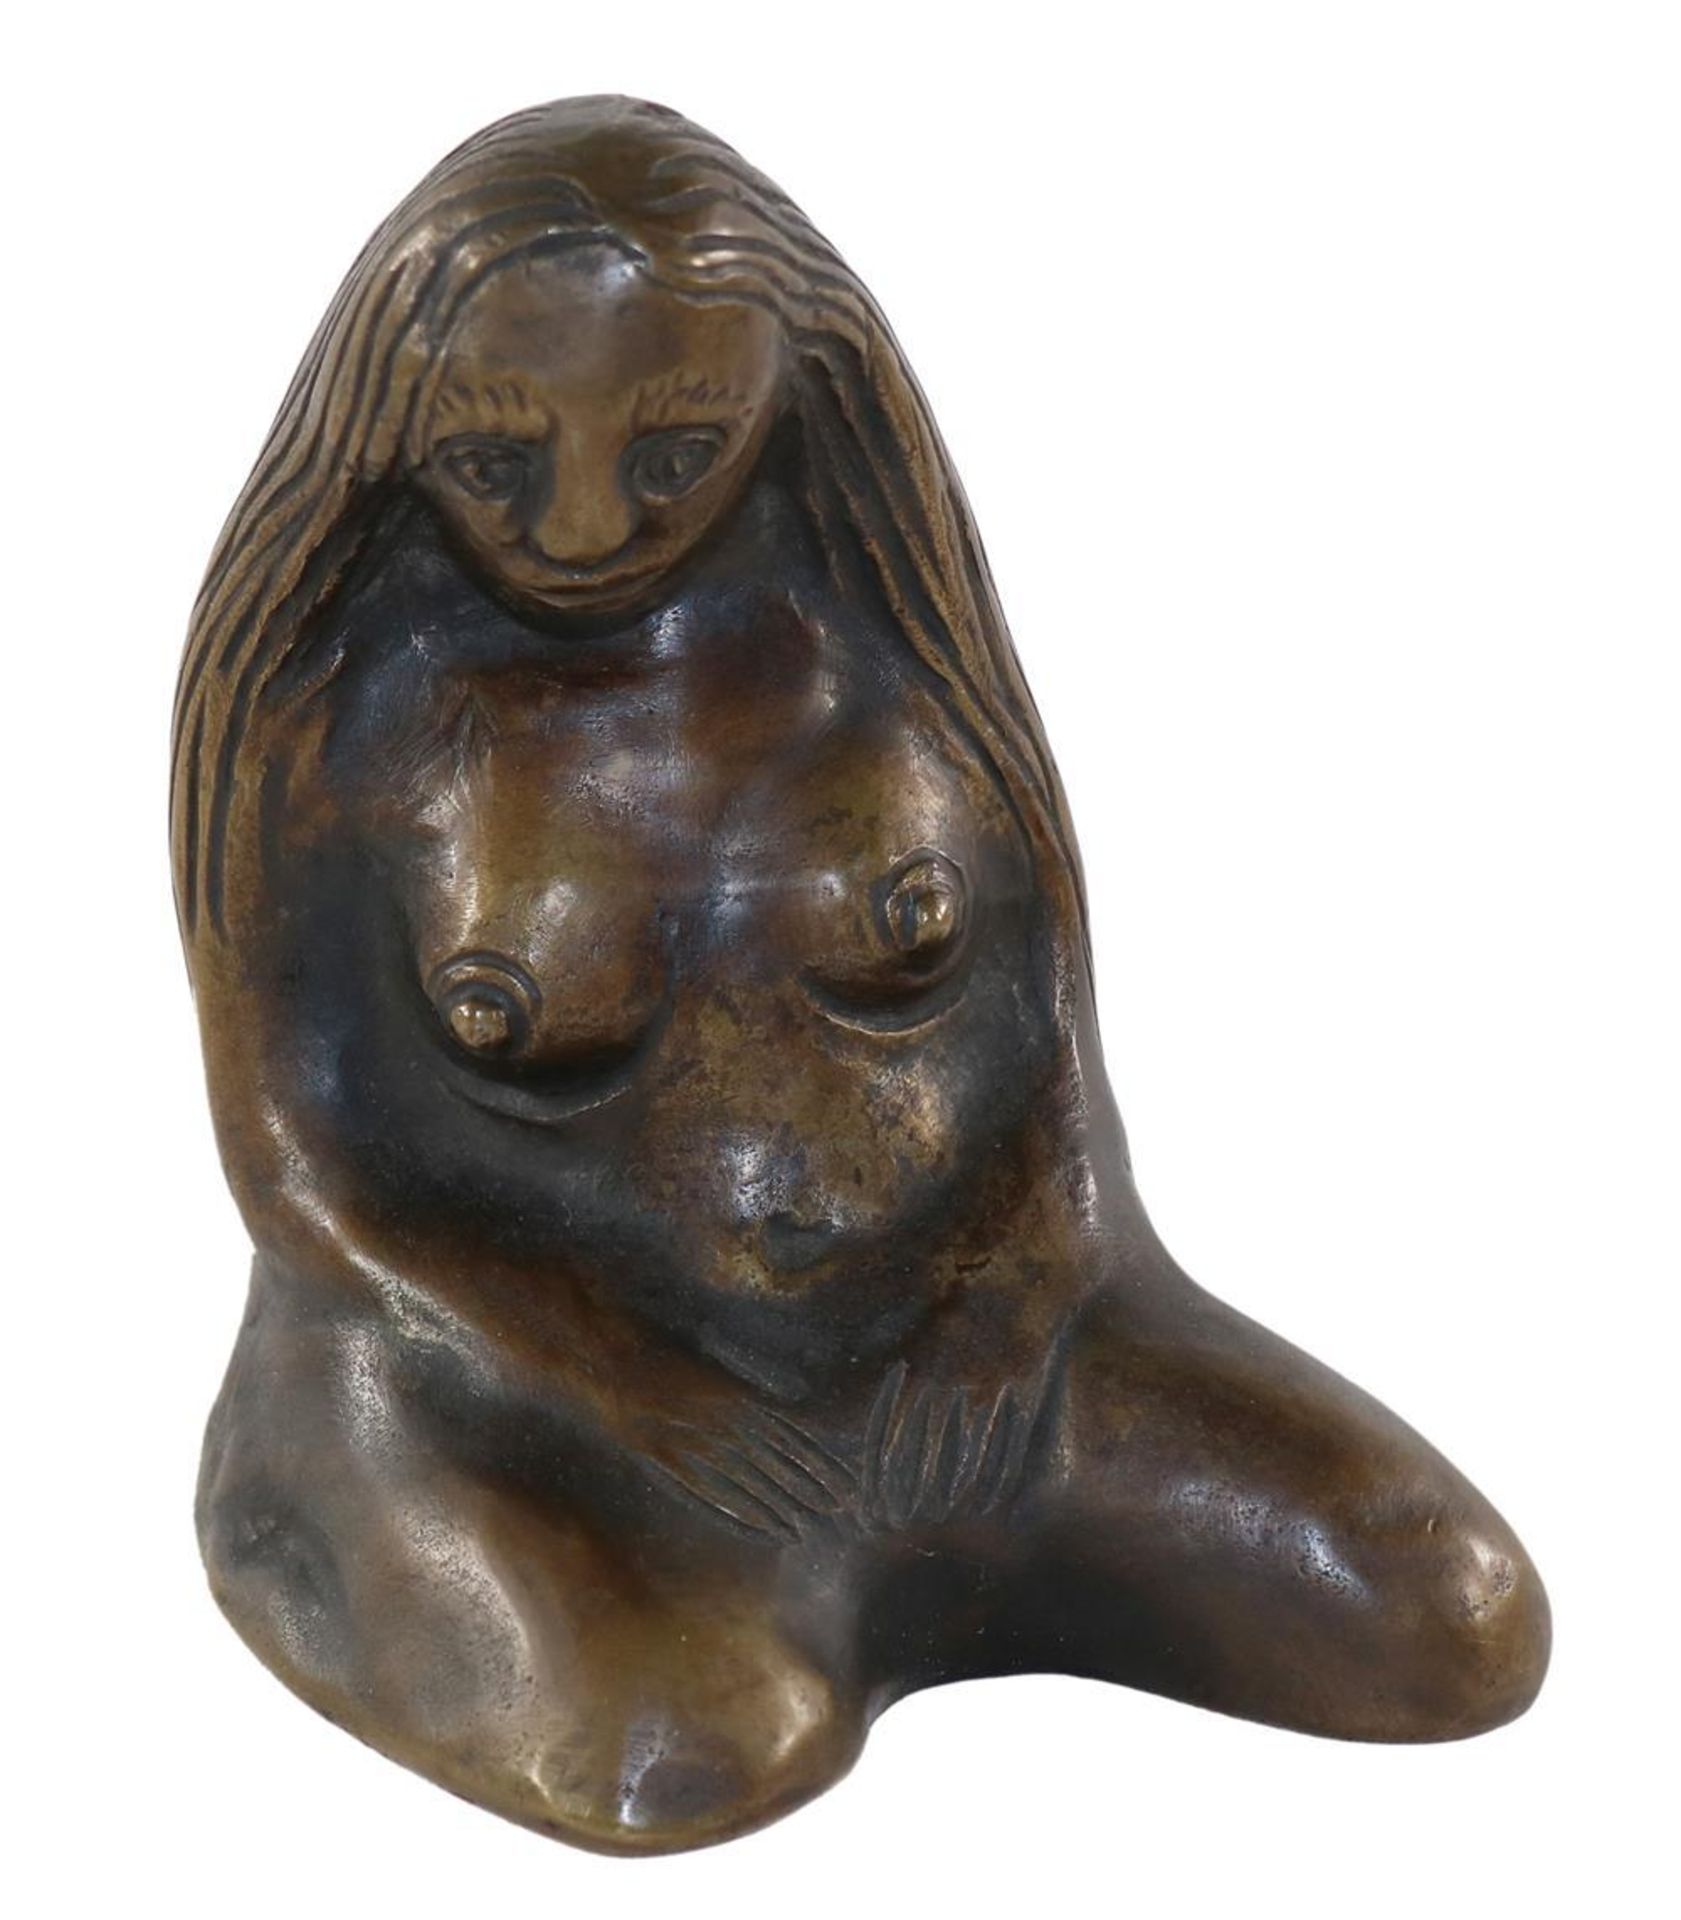 Nolde, Emil(1867 Buhrkall - Seebüll 1956). Hockende Frau. Bronze mit brauner Patina, um 1920/1971.